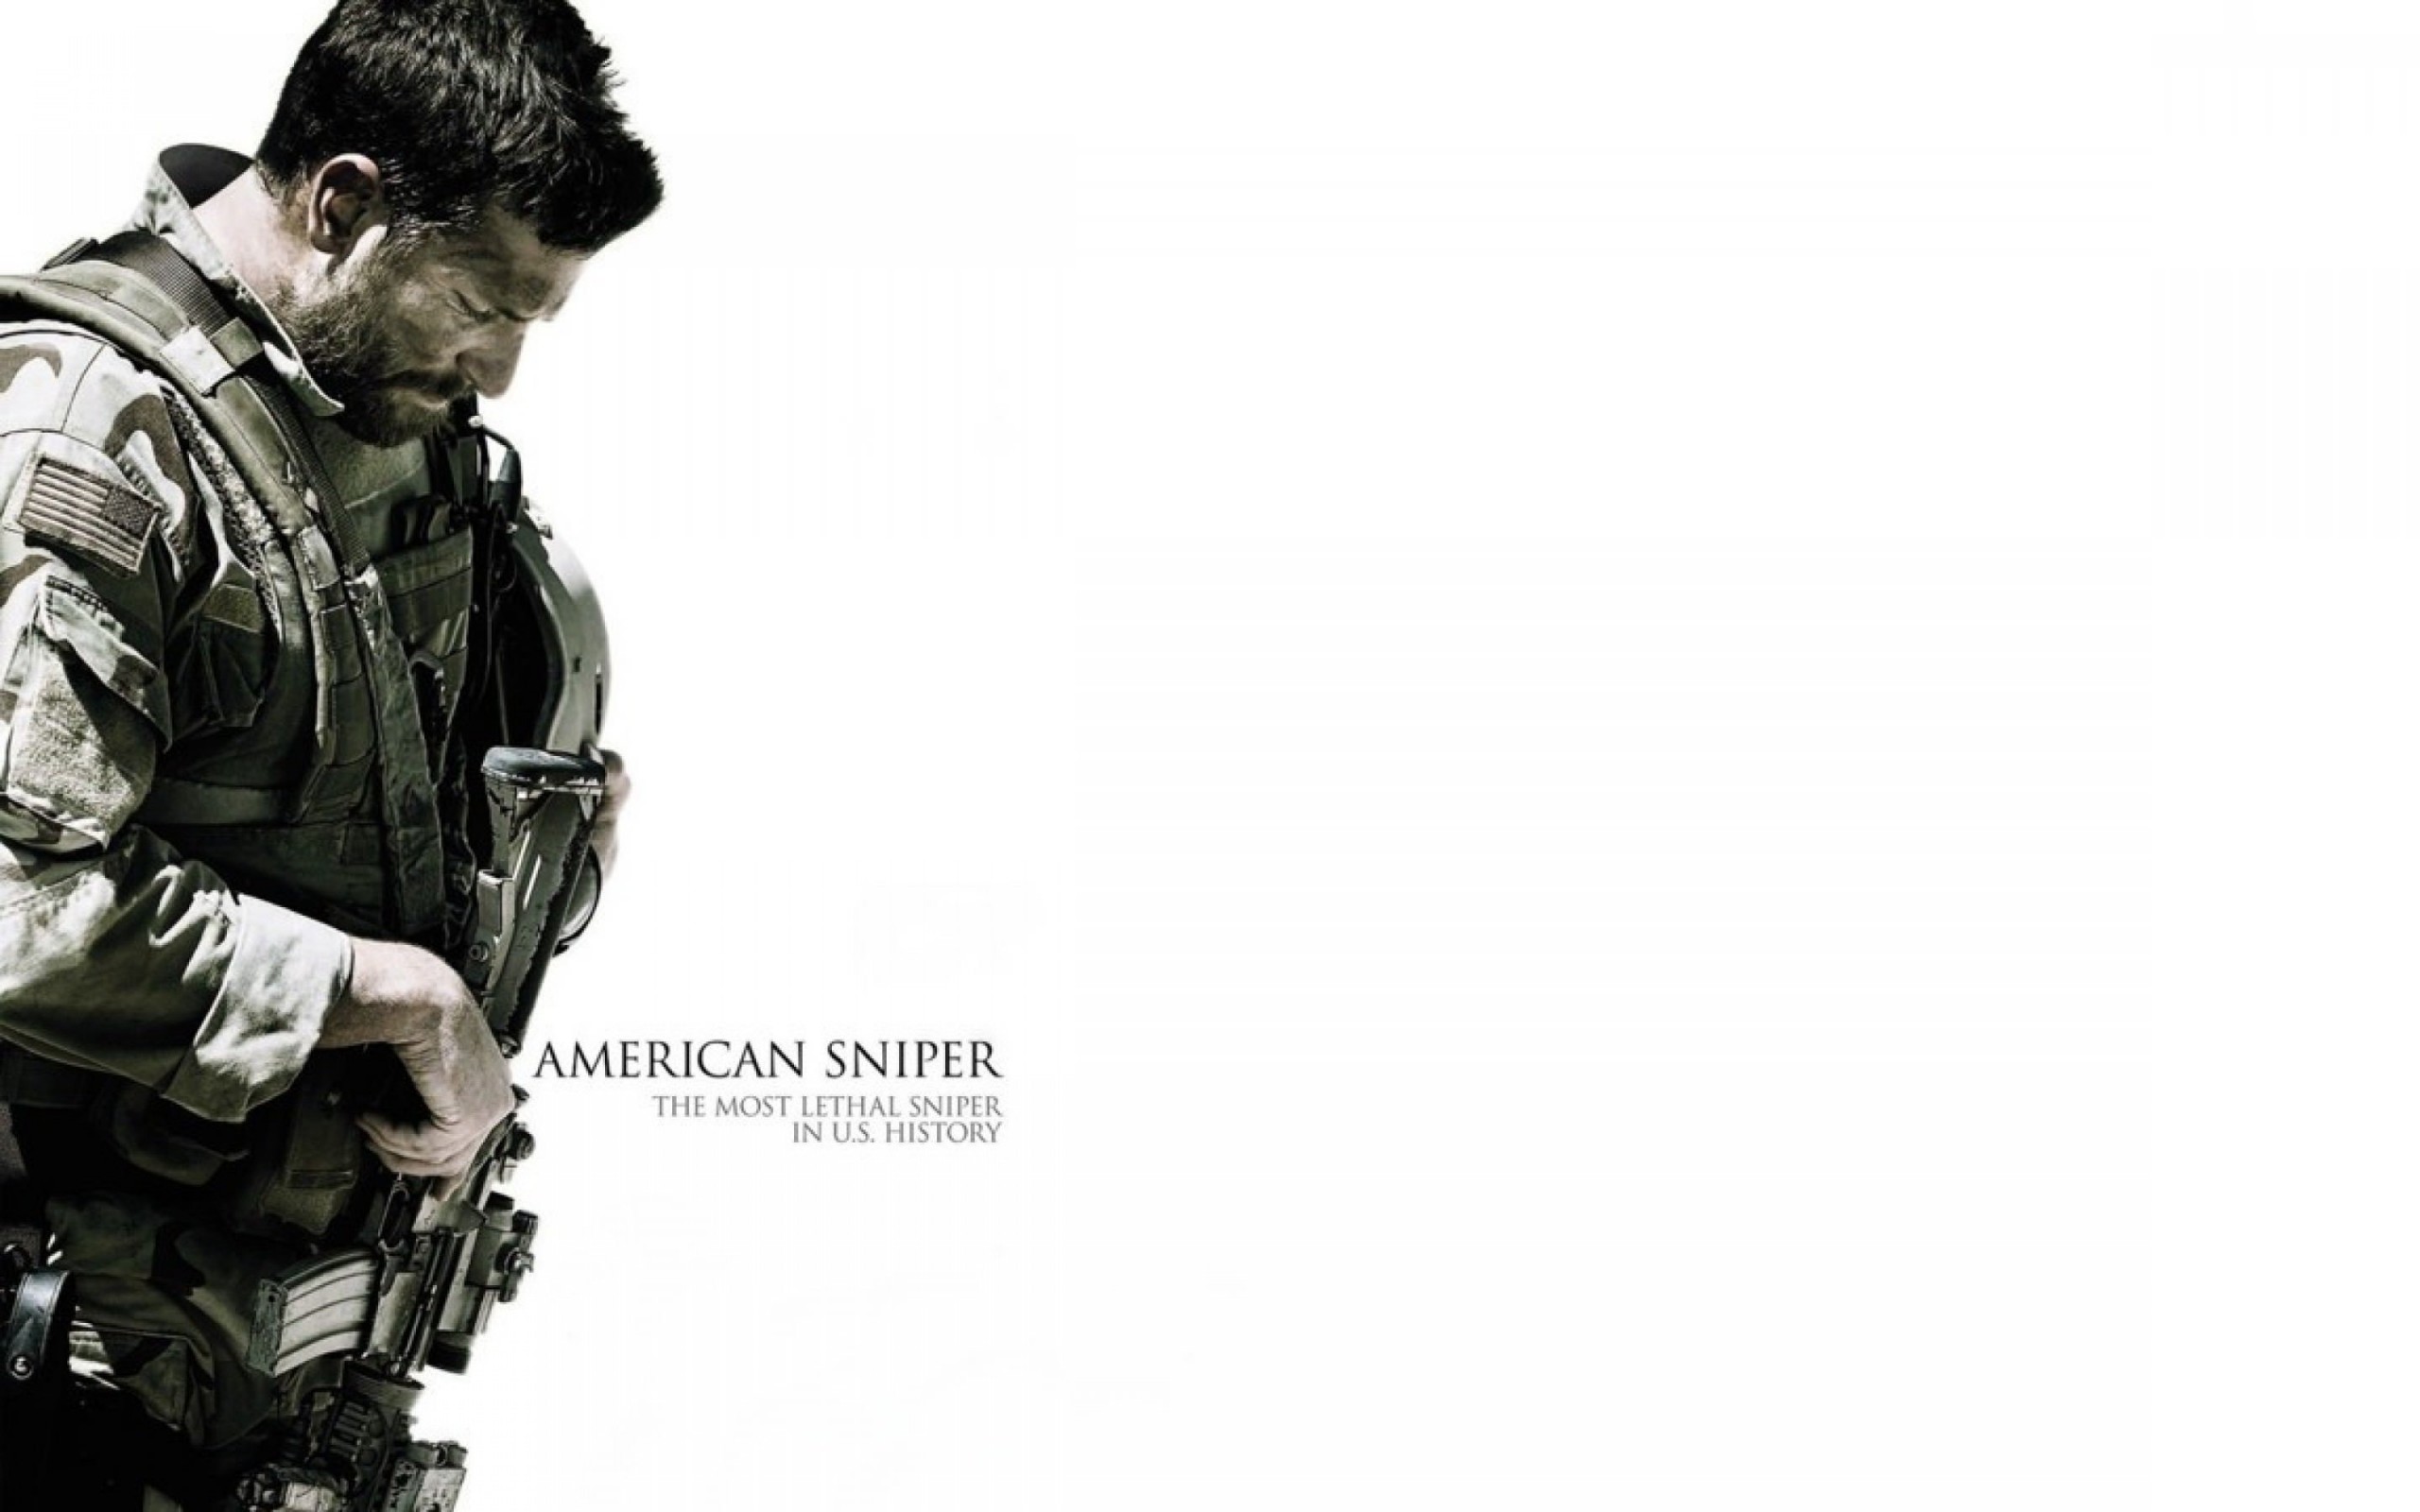 Bradley Cooper As Chris Kyle in American sniper Wallpaper for Desktop 2560x1600